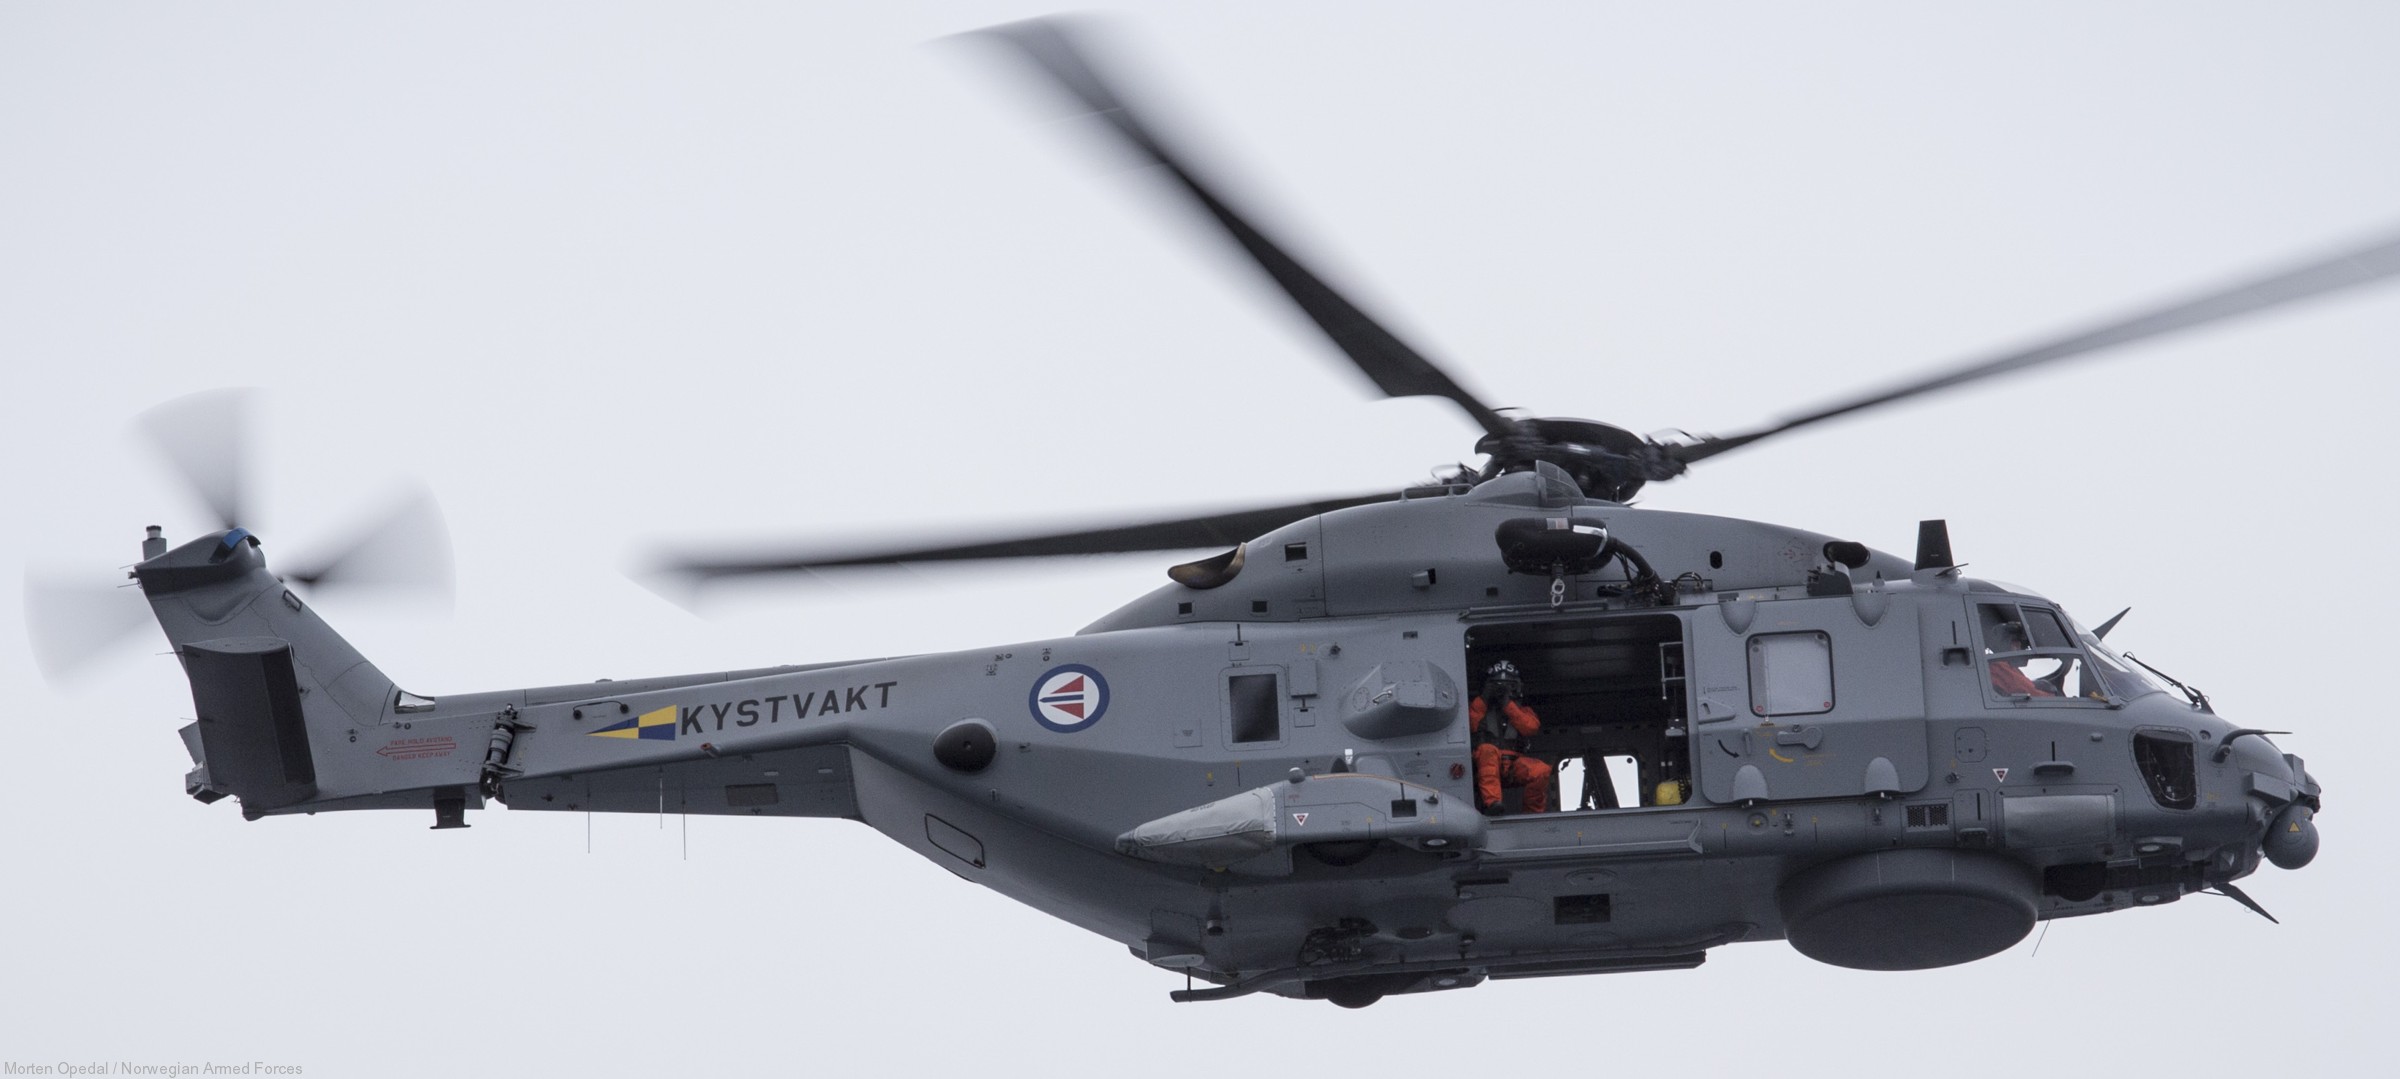 nh90 nfh asw helicopter royal norwegian coast guard navy air force kystvakt sjoforsvaret 02